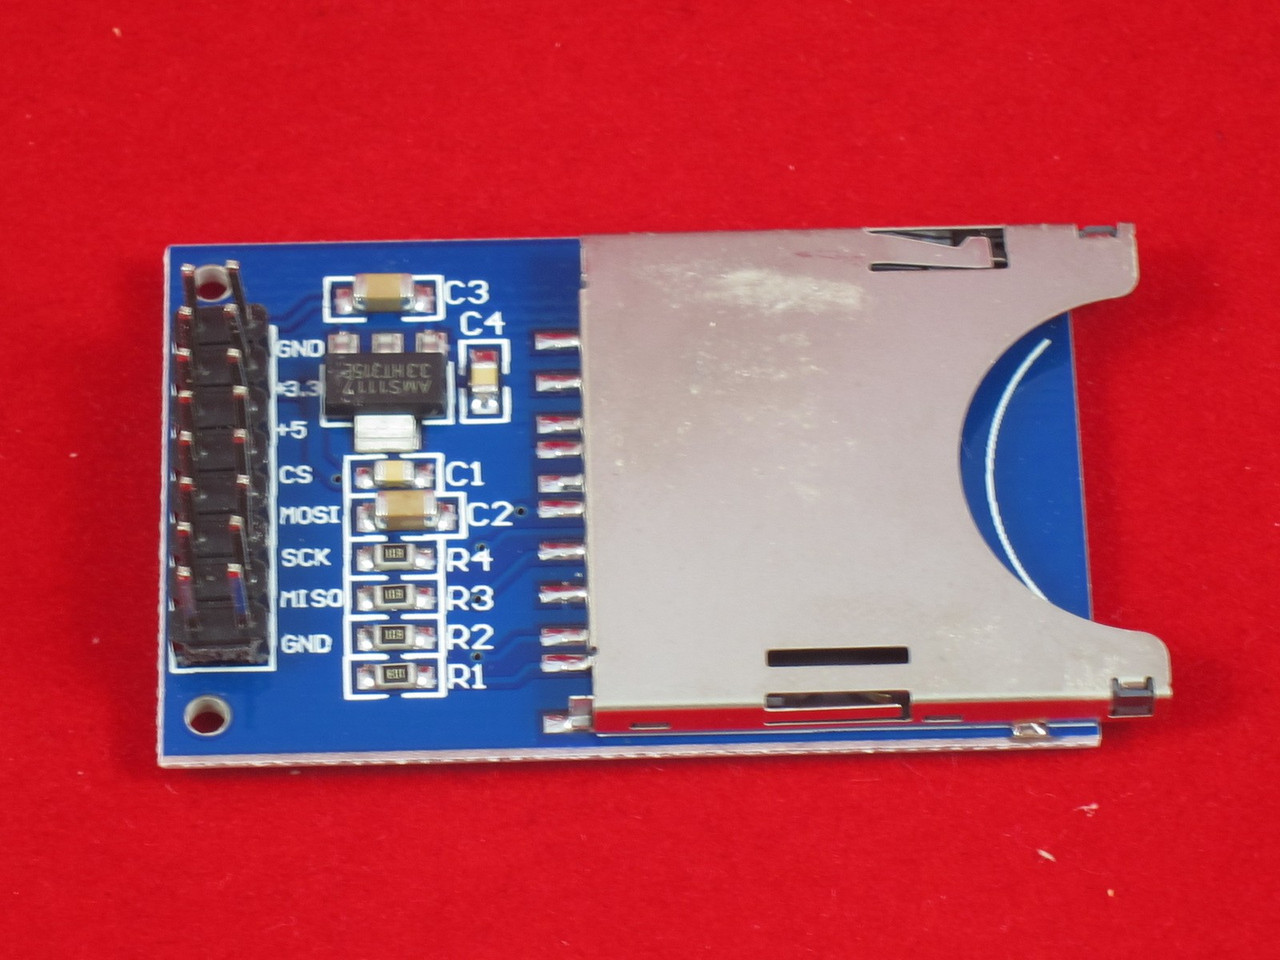 Модуль кардридера SD карты для Arduino